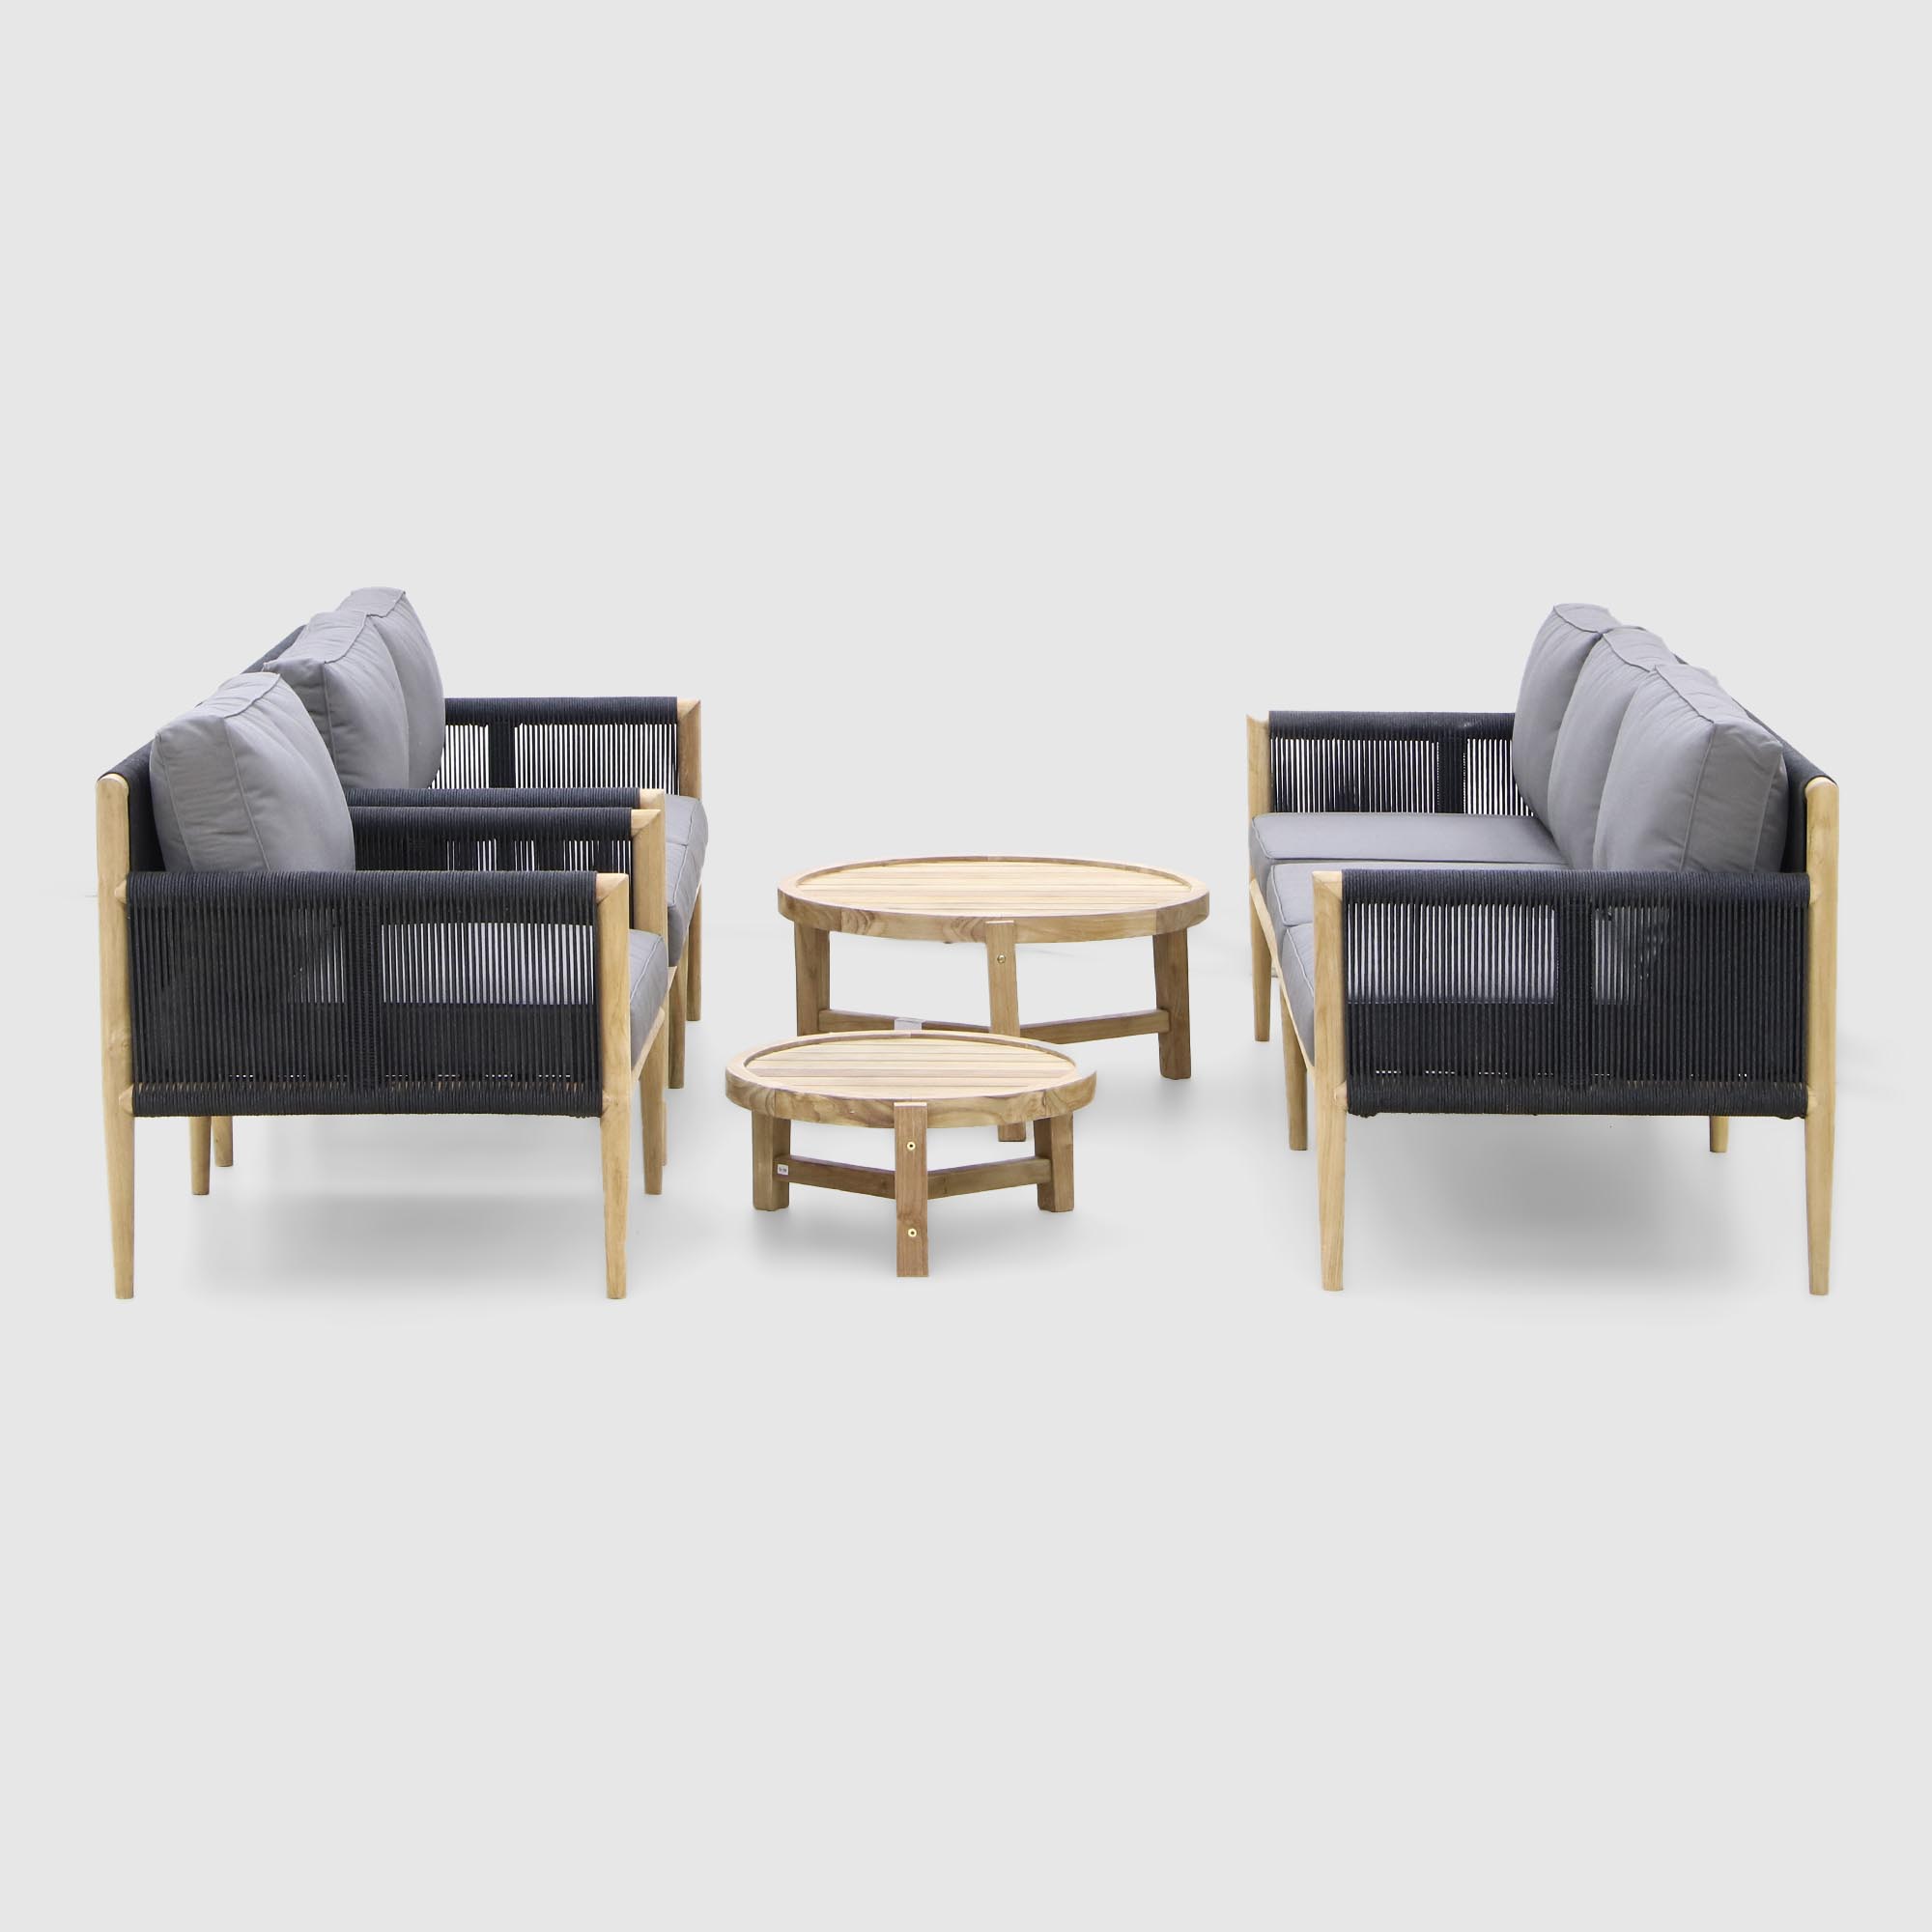 Комплект мебели Jepara Taurus из 5 предметов :2 дивана+кресло+столики комплект мебели alora garden rio 2 дивана 2 кресла столик